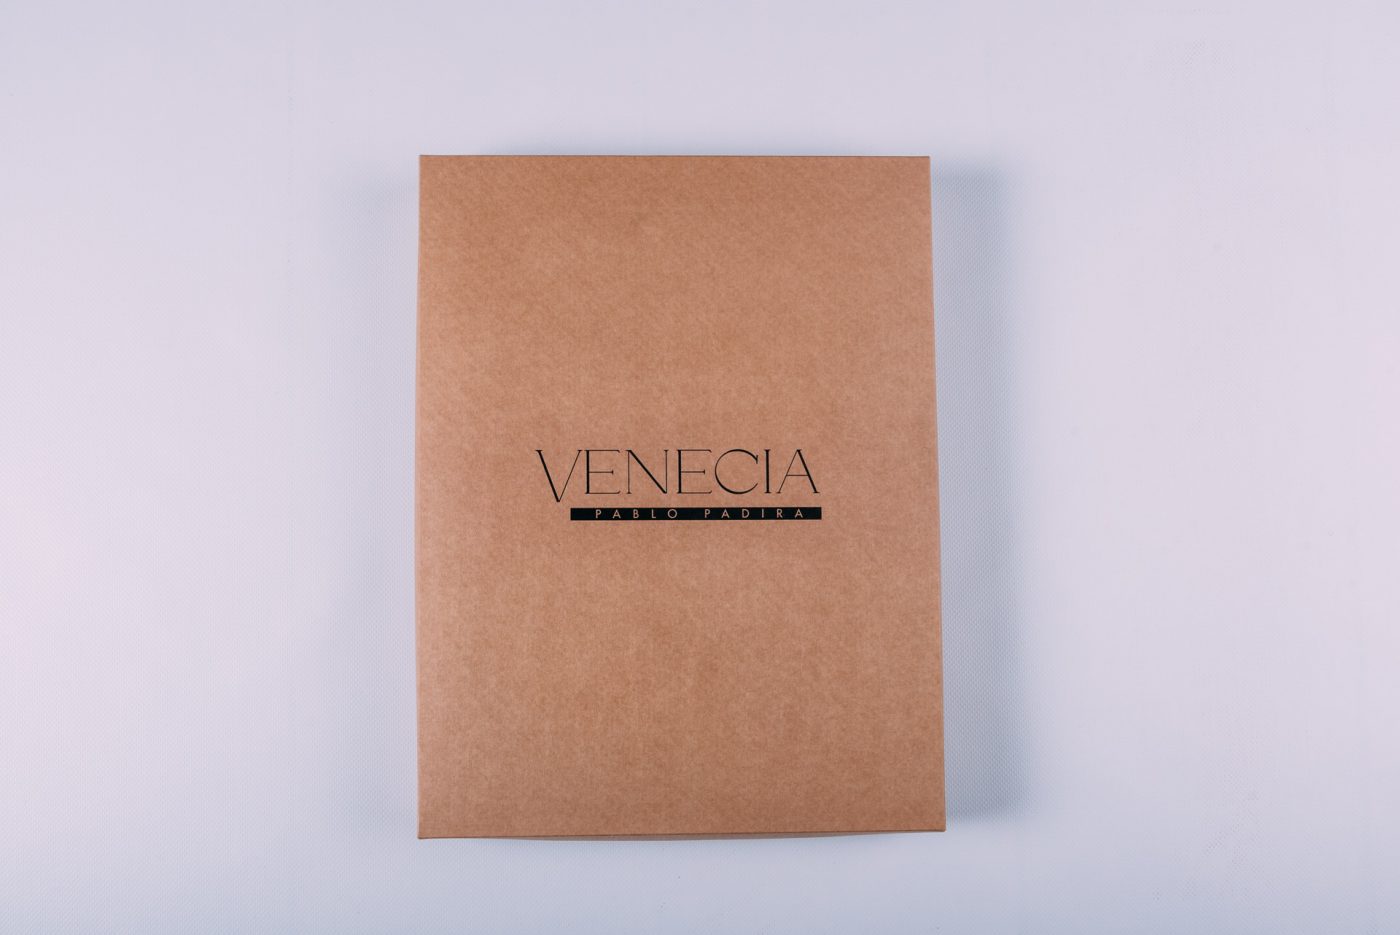 Caja Venecia ©Pablo_Padira